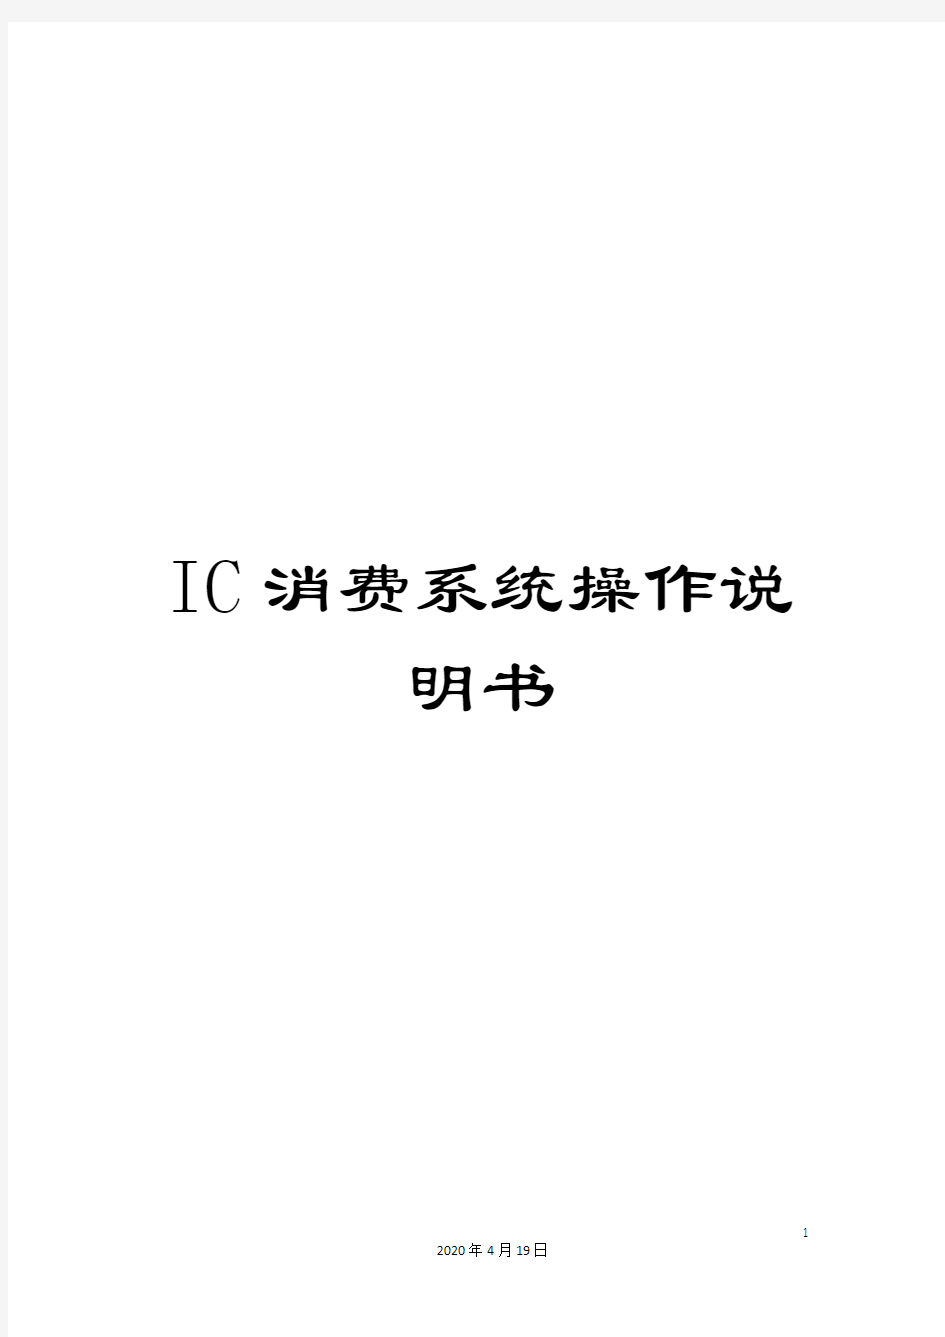 IC消费系统操作说明书